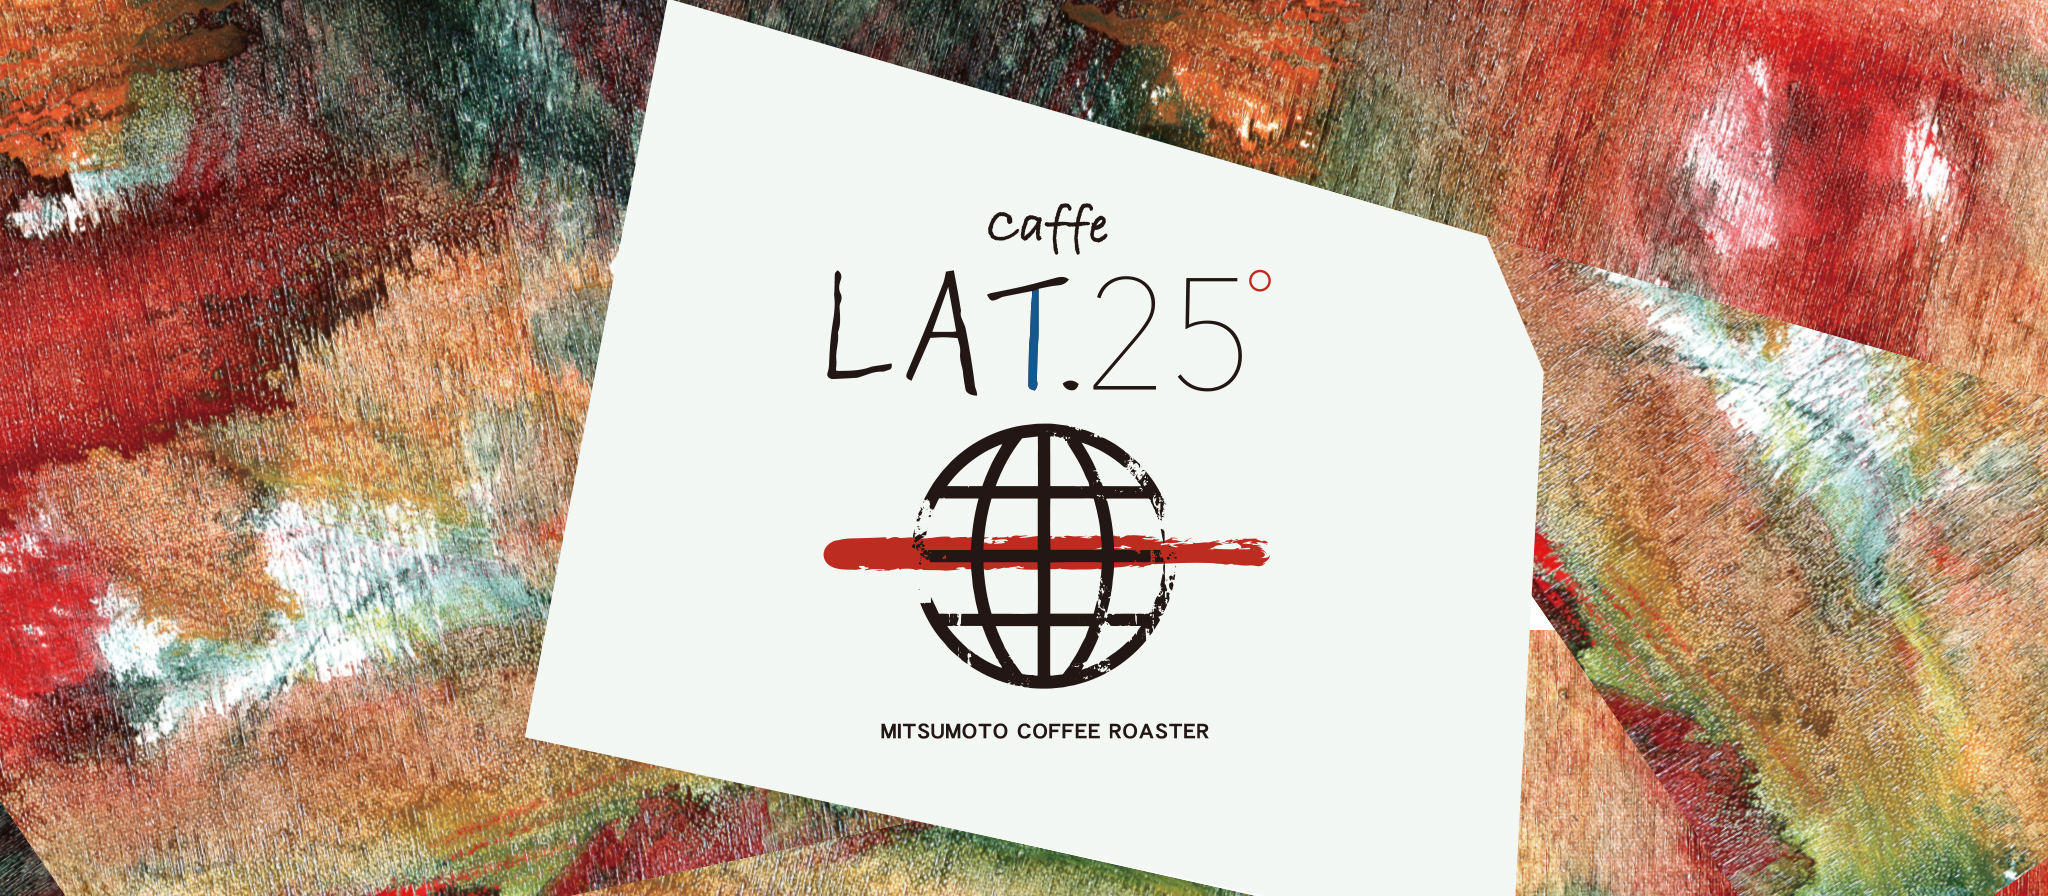 caffeLAT.25 MITSUMOTO COFFEE ROASTER